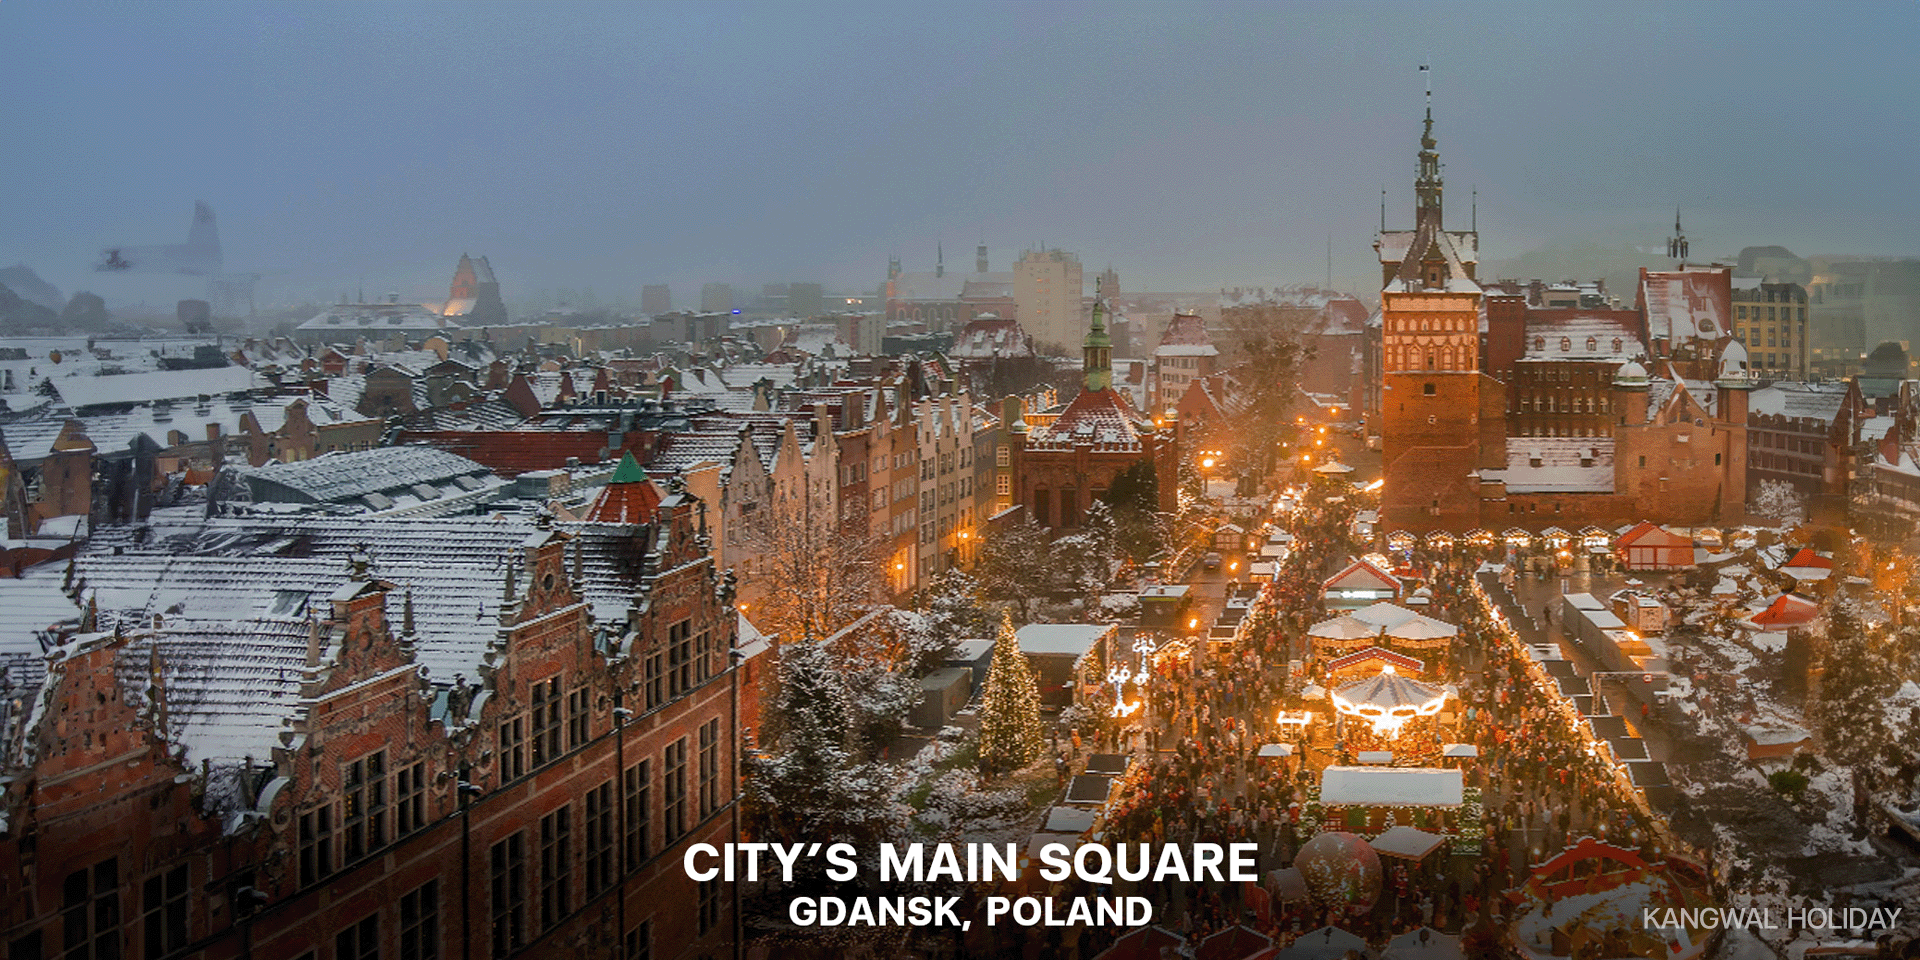 City's Main Square: Gdansk, Poland